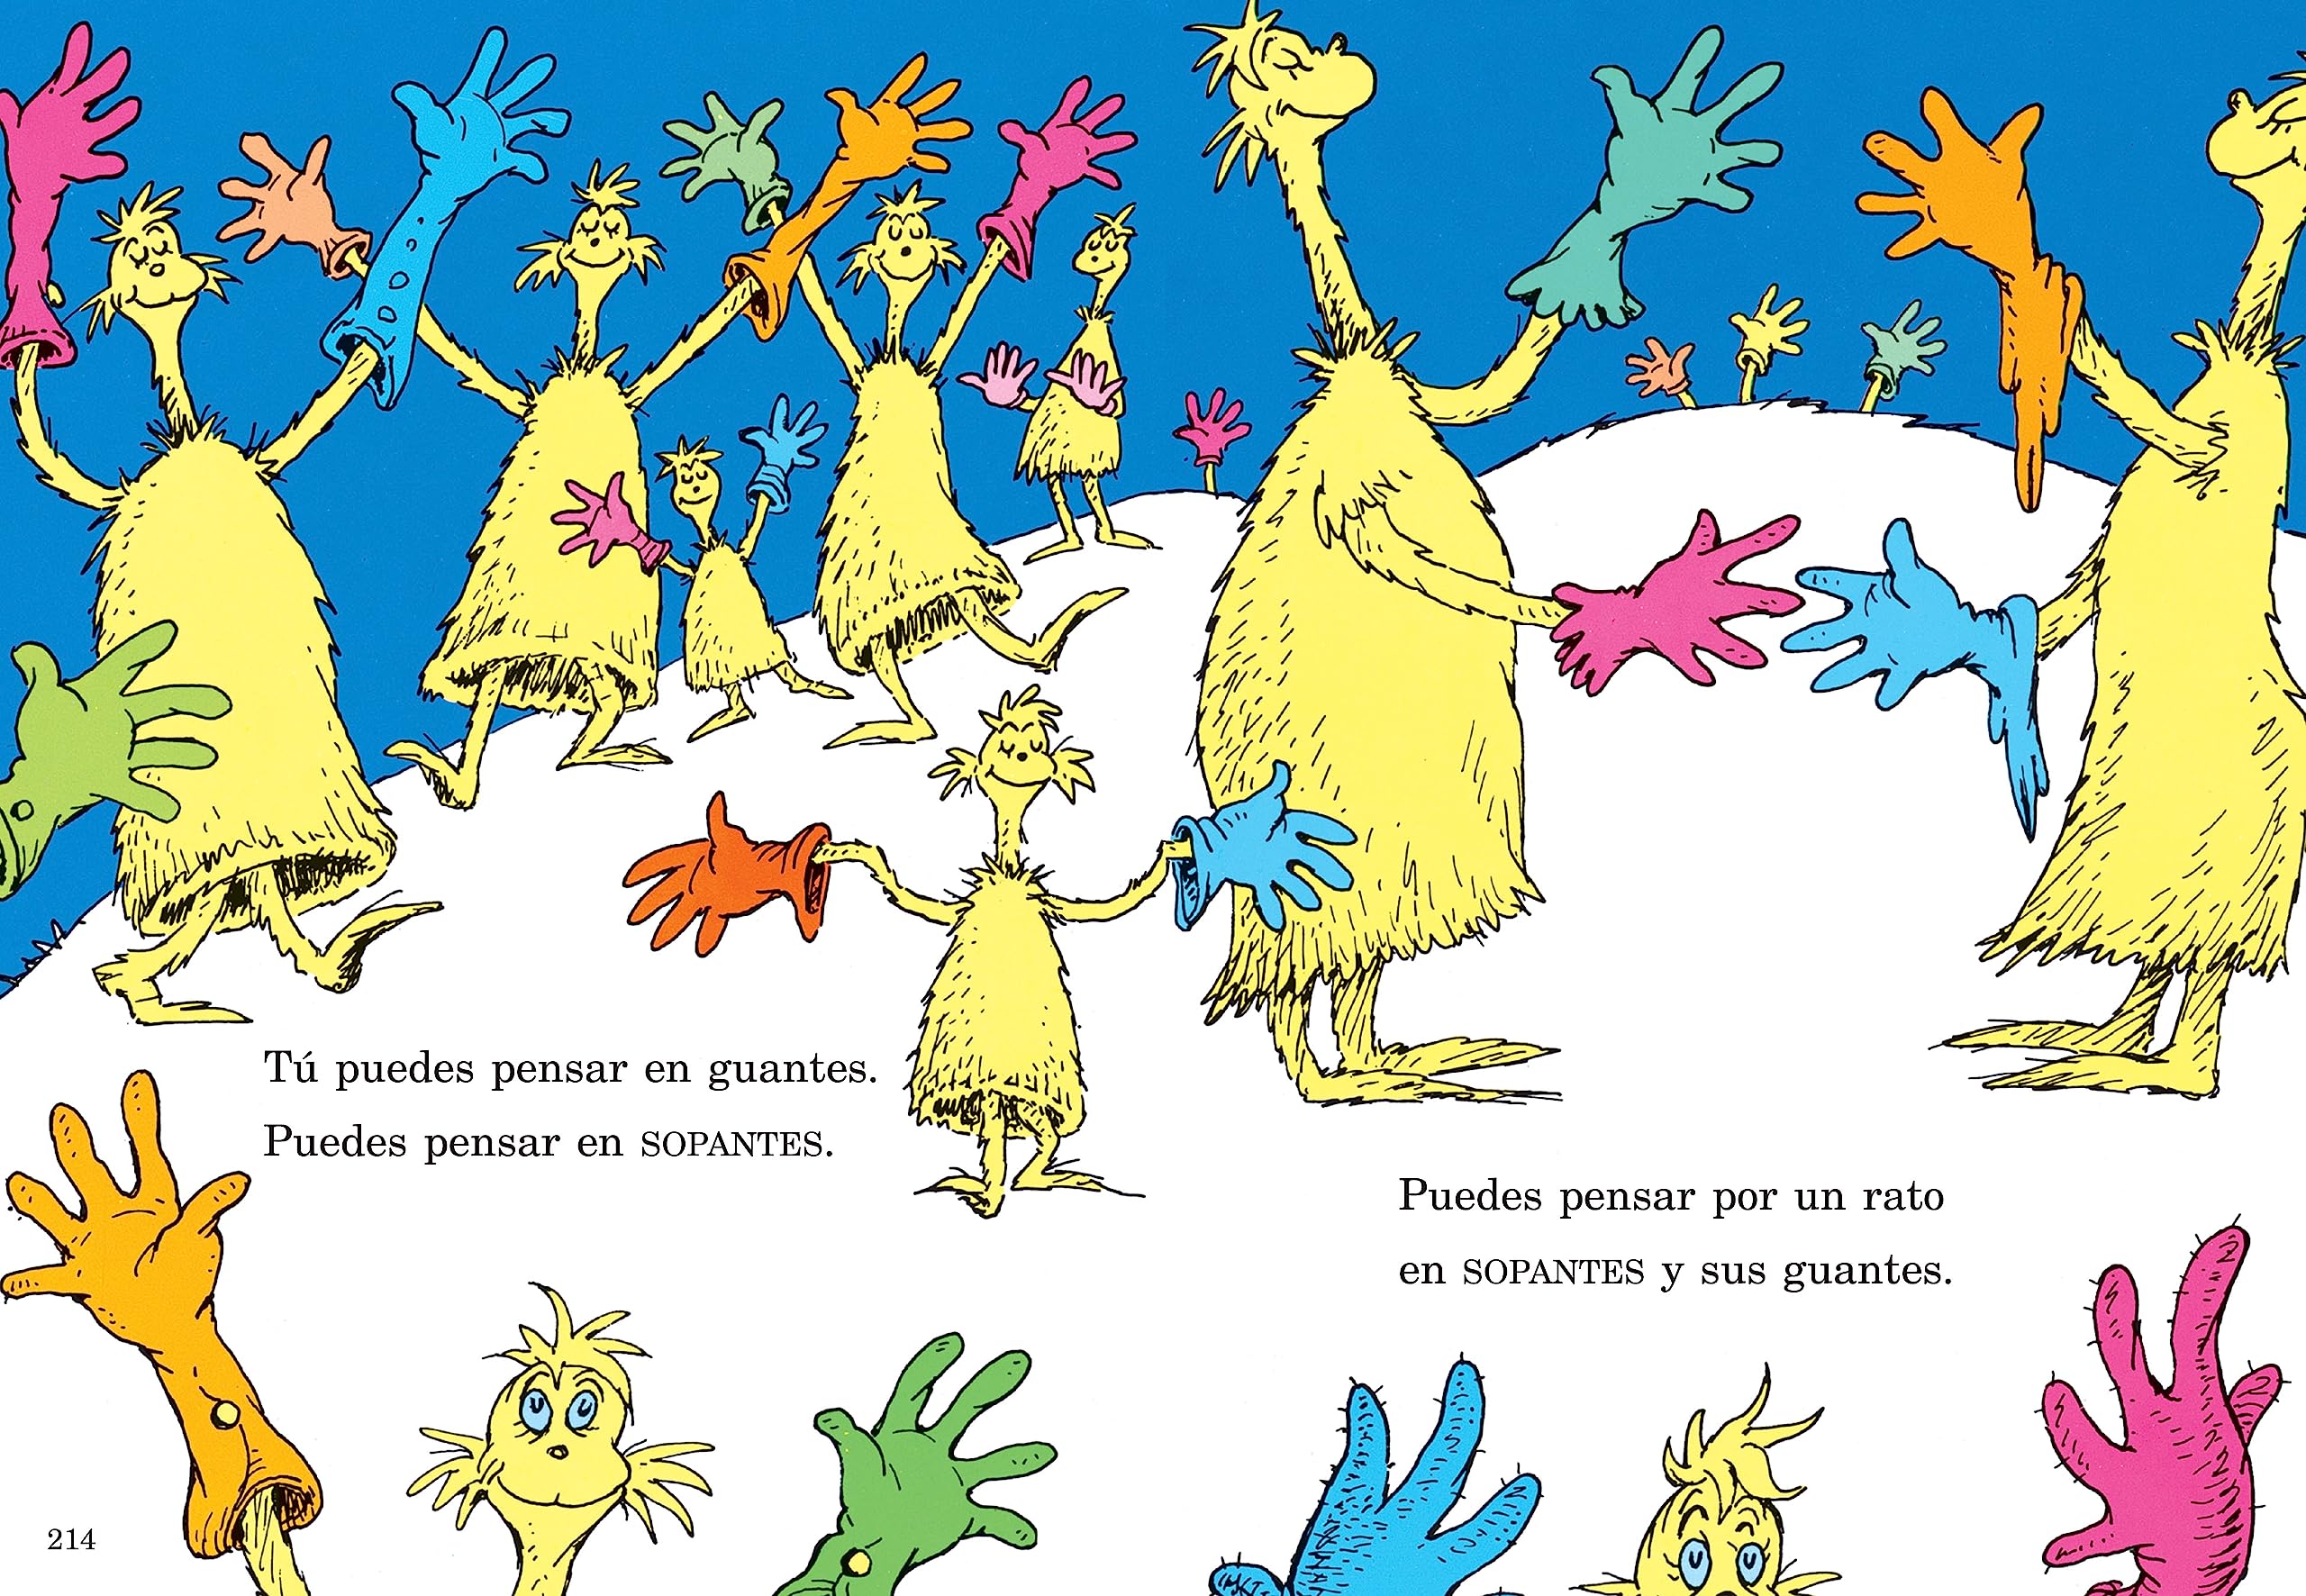 El gran libro de Beginner Books en español de Dr. Seuss (The Big Book of Beginner Books by Dr. Seuss) (Beginner Books(R)) (Spanish Edition)